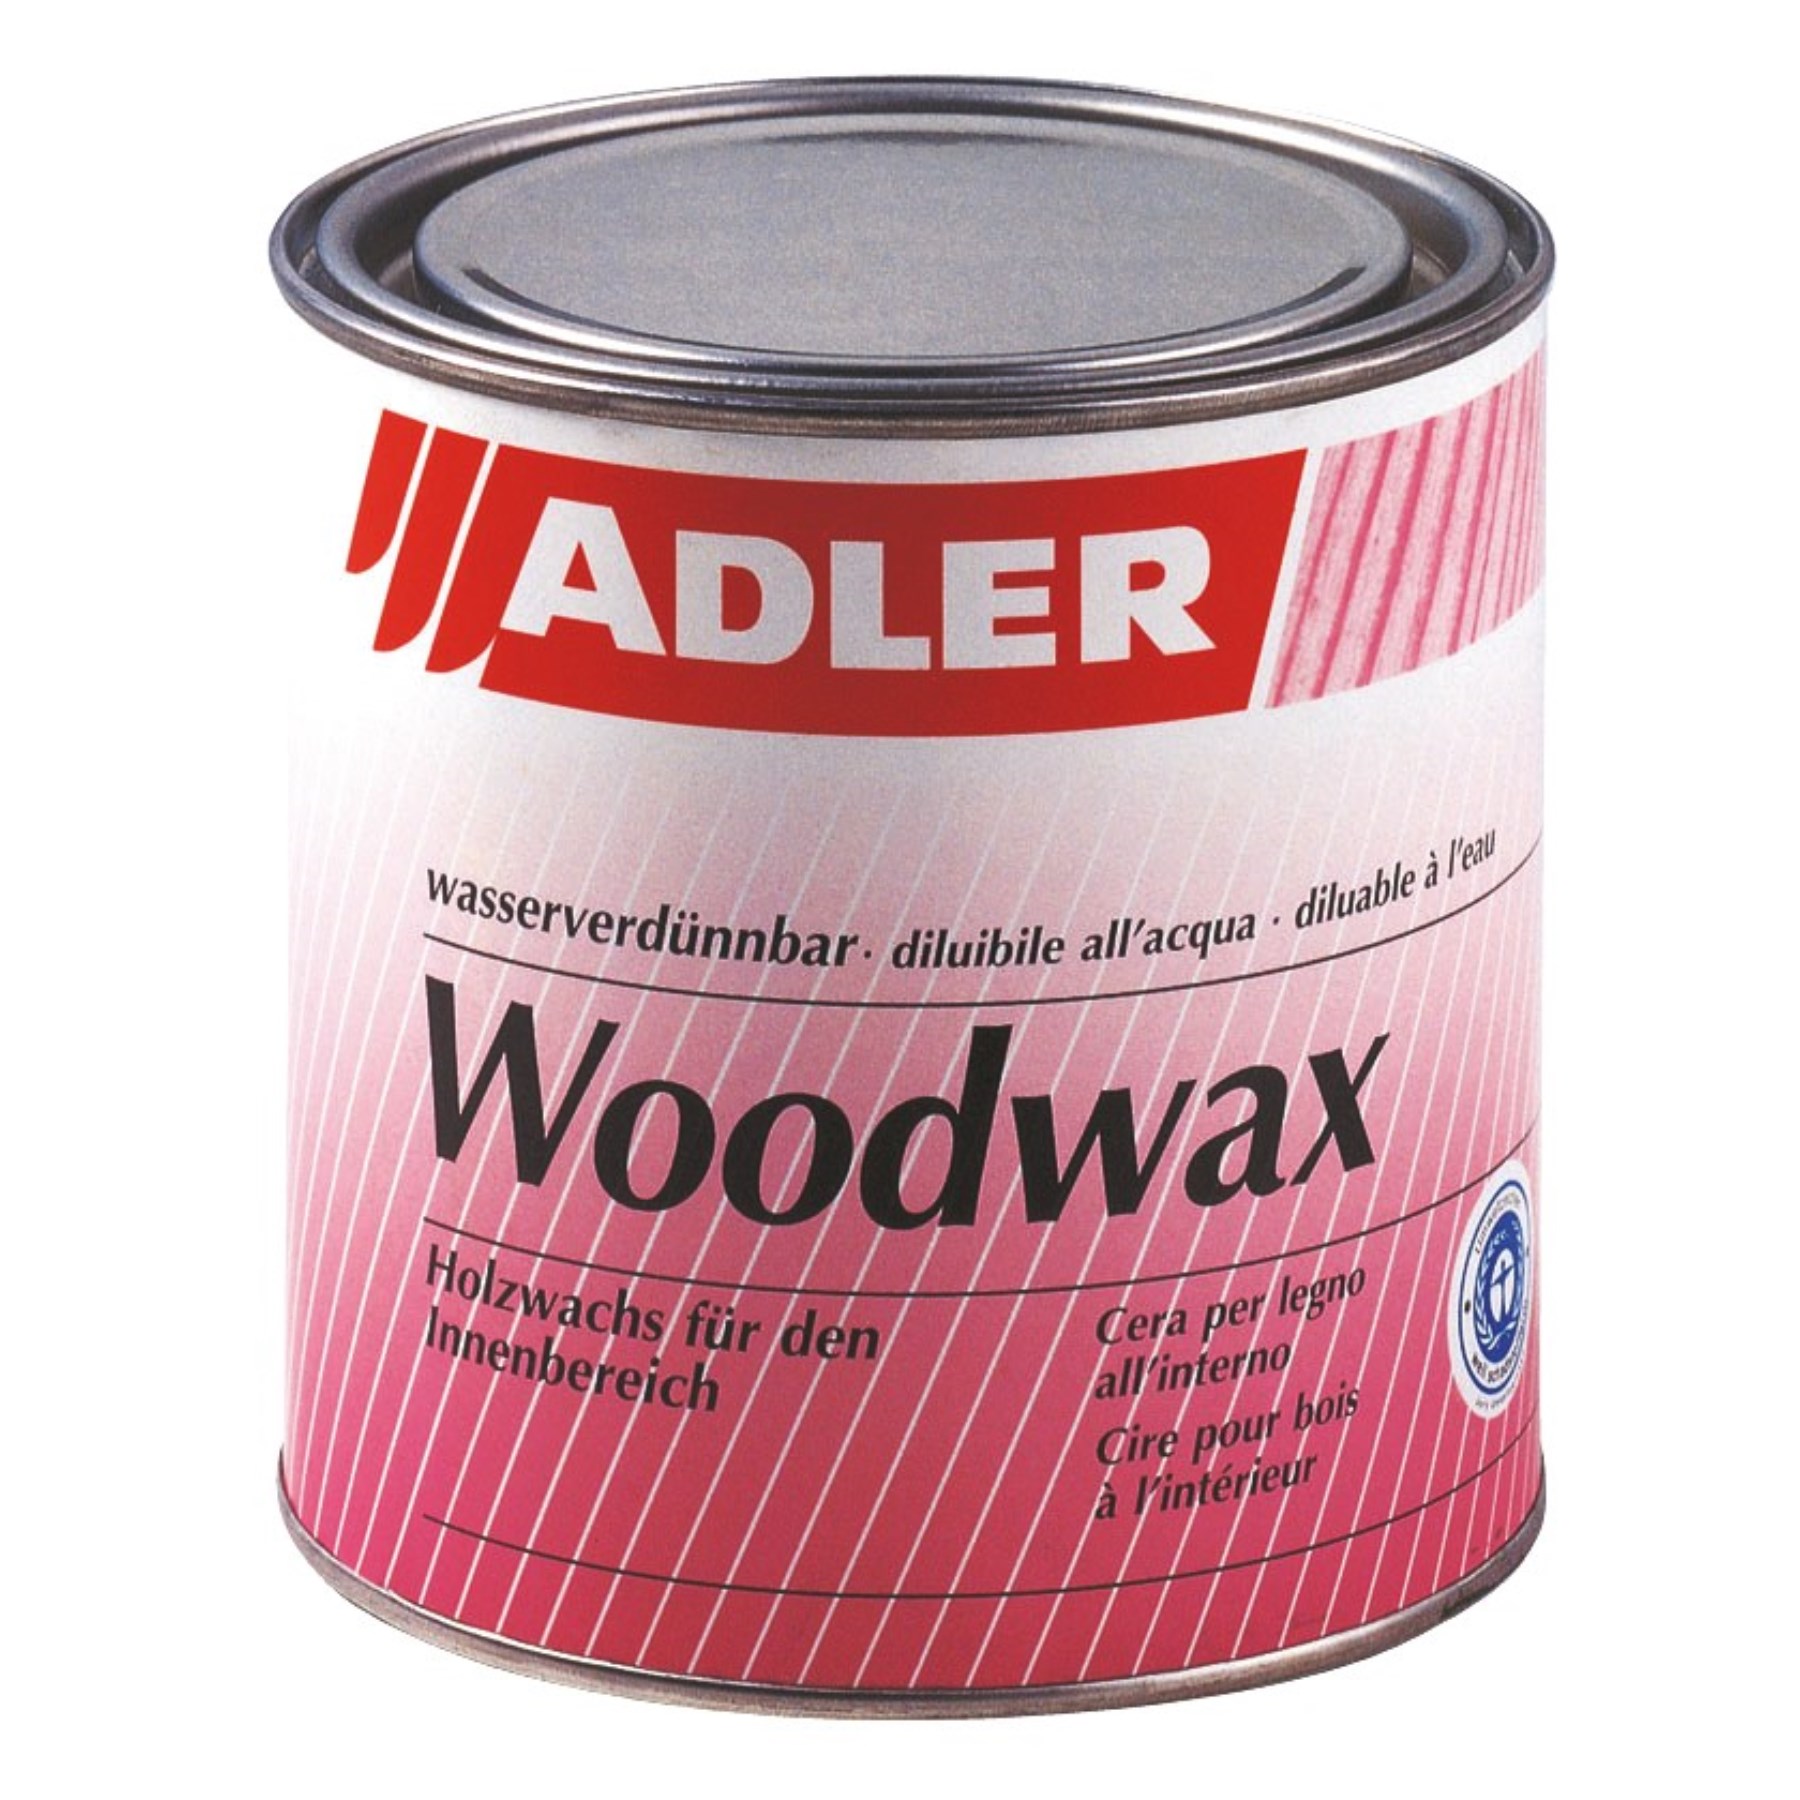 1079630 - Woodwax farblos 750ml Holzveredelung